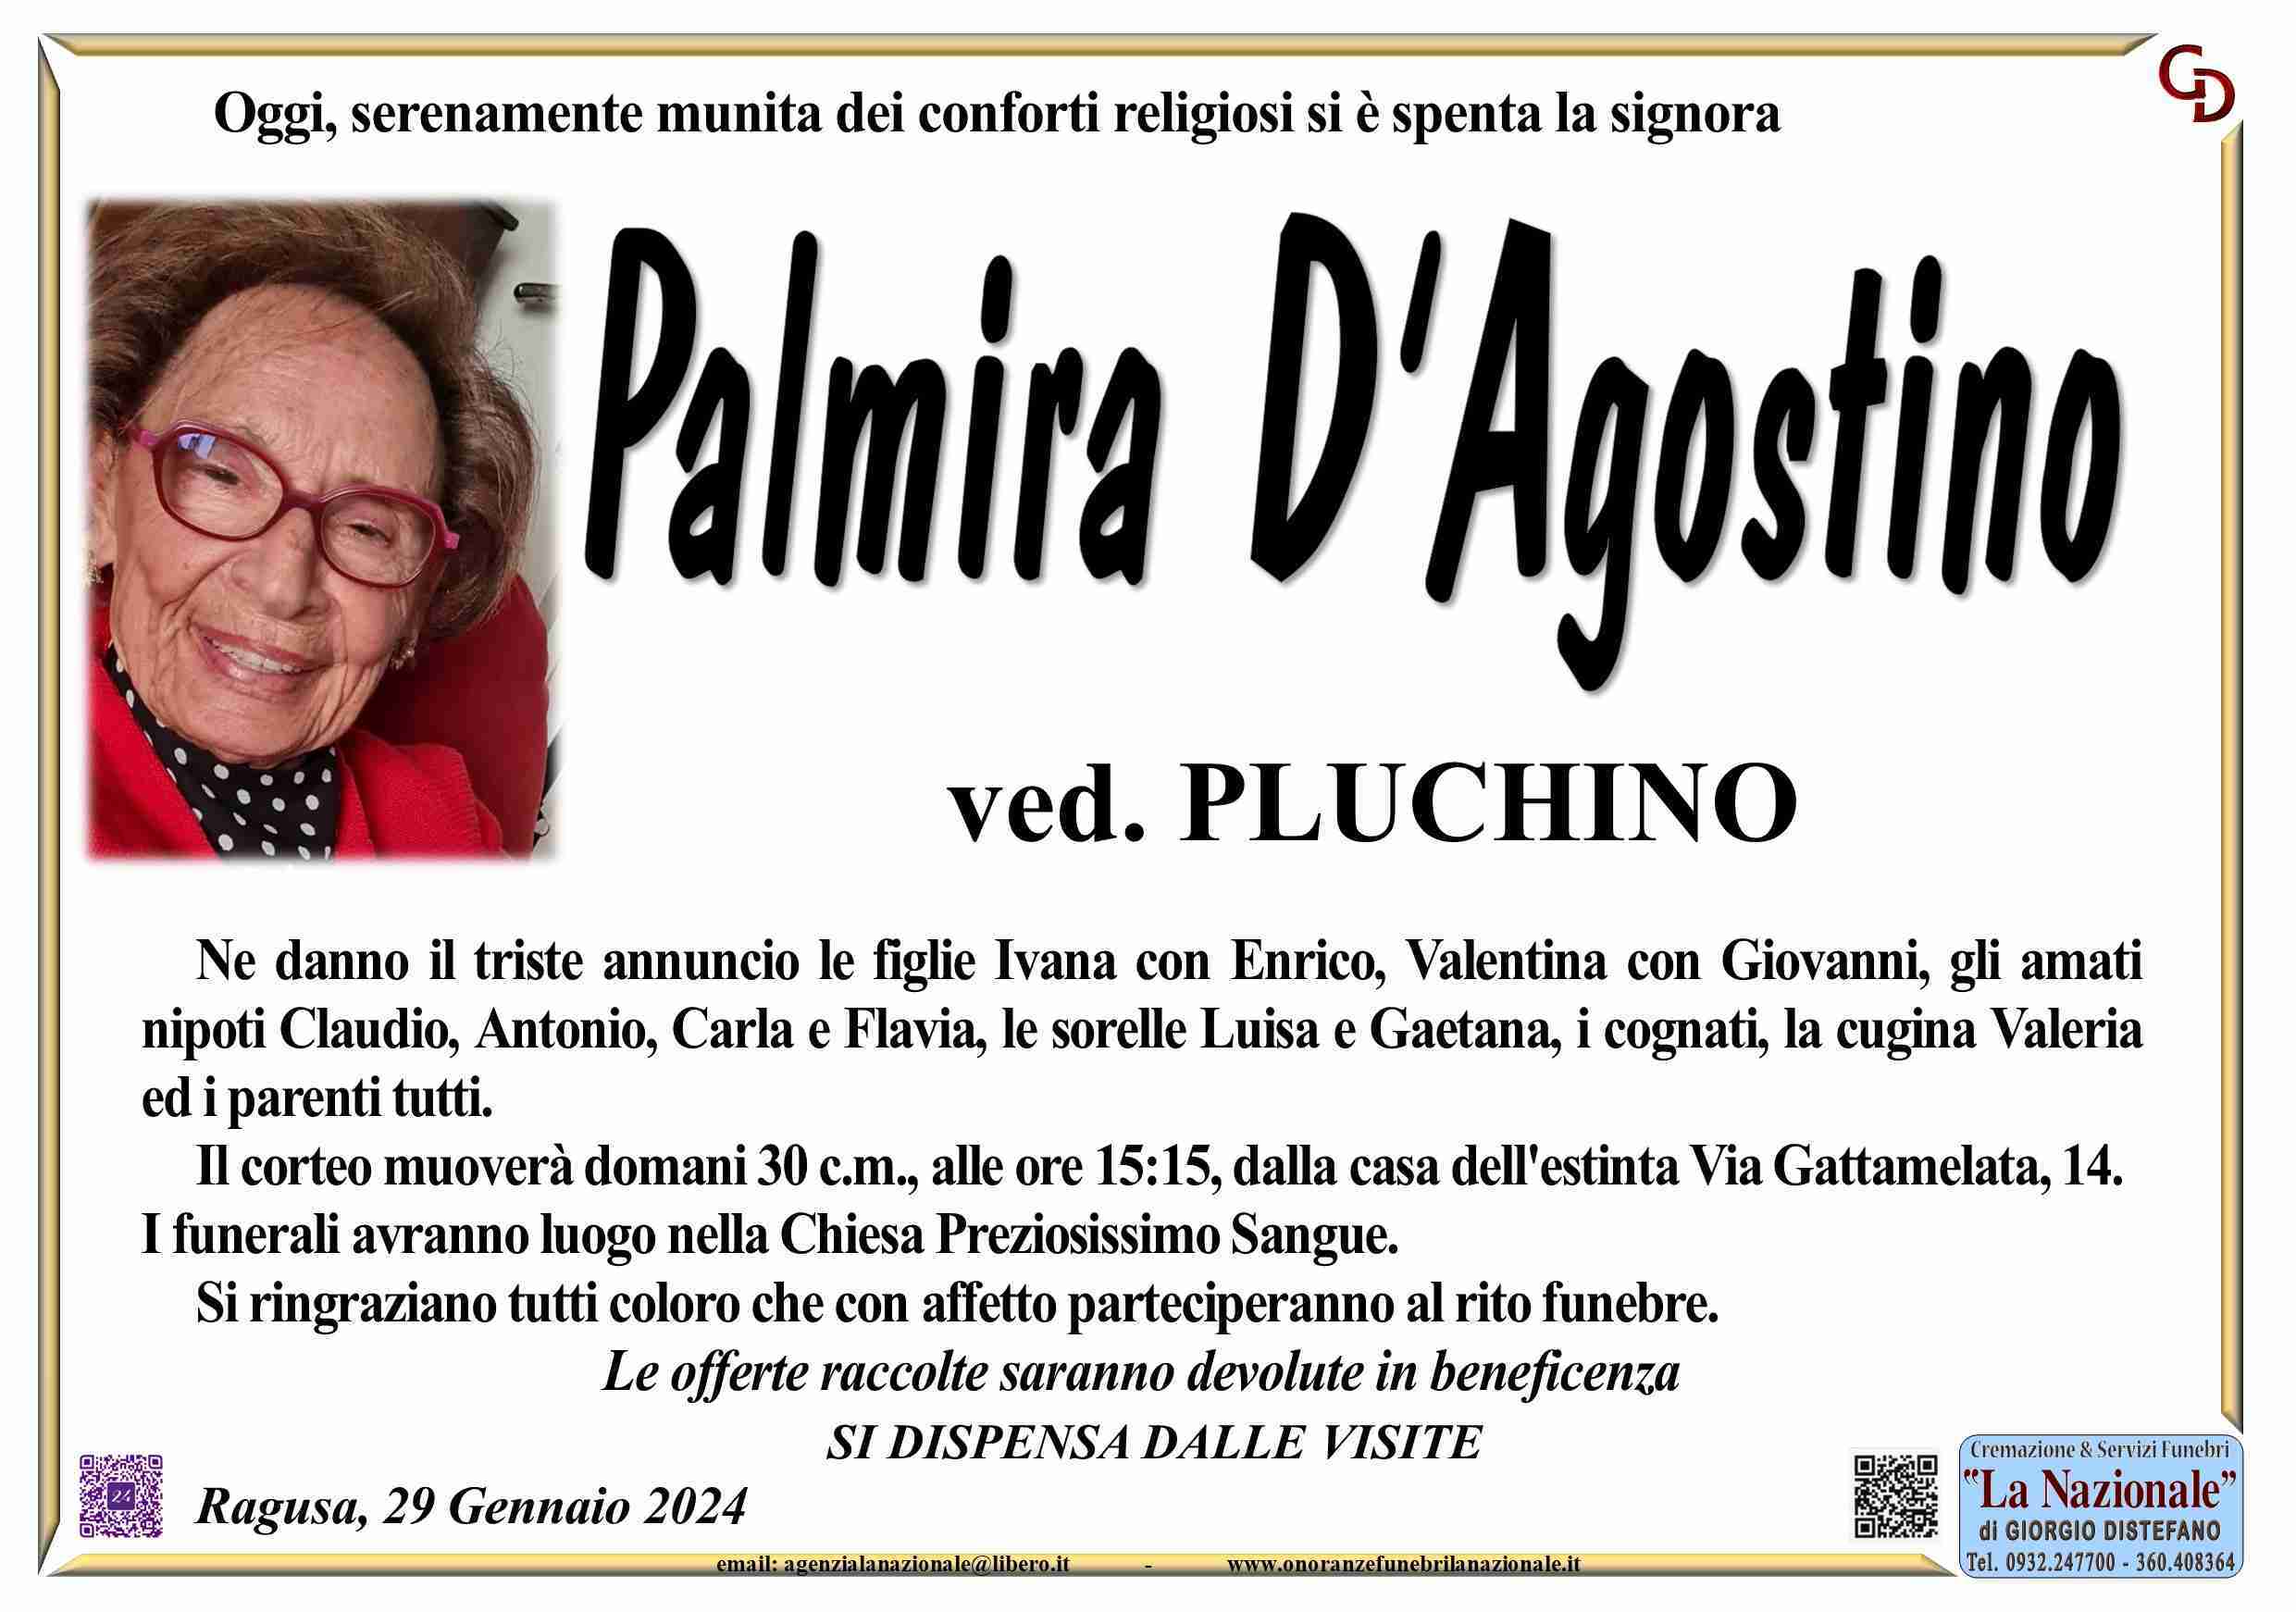 Palmira D'Agostino